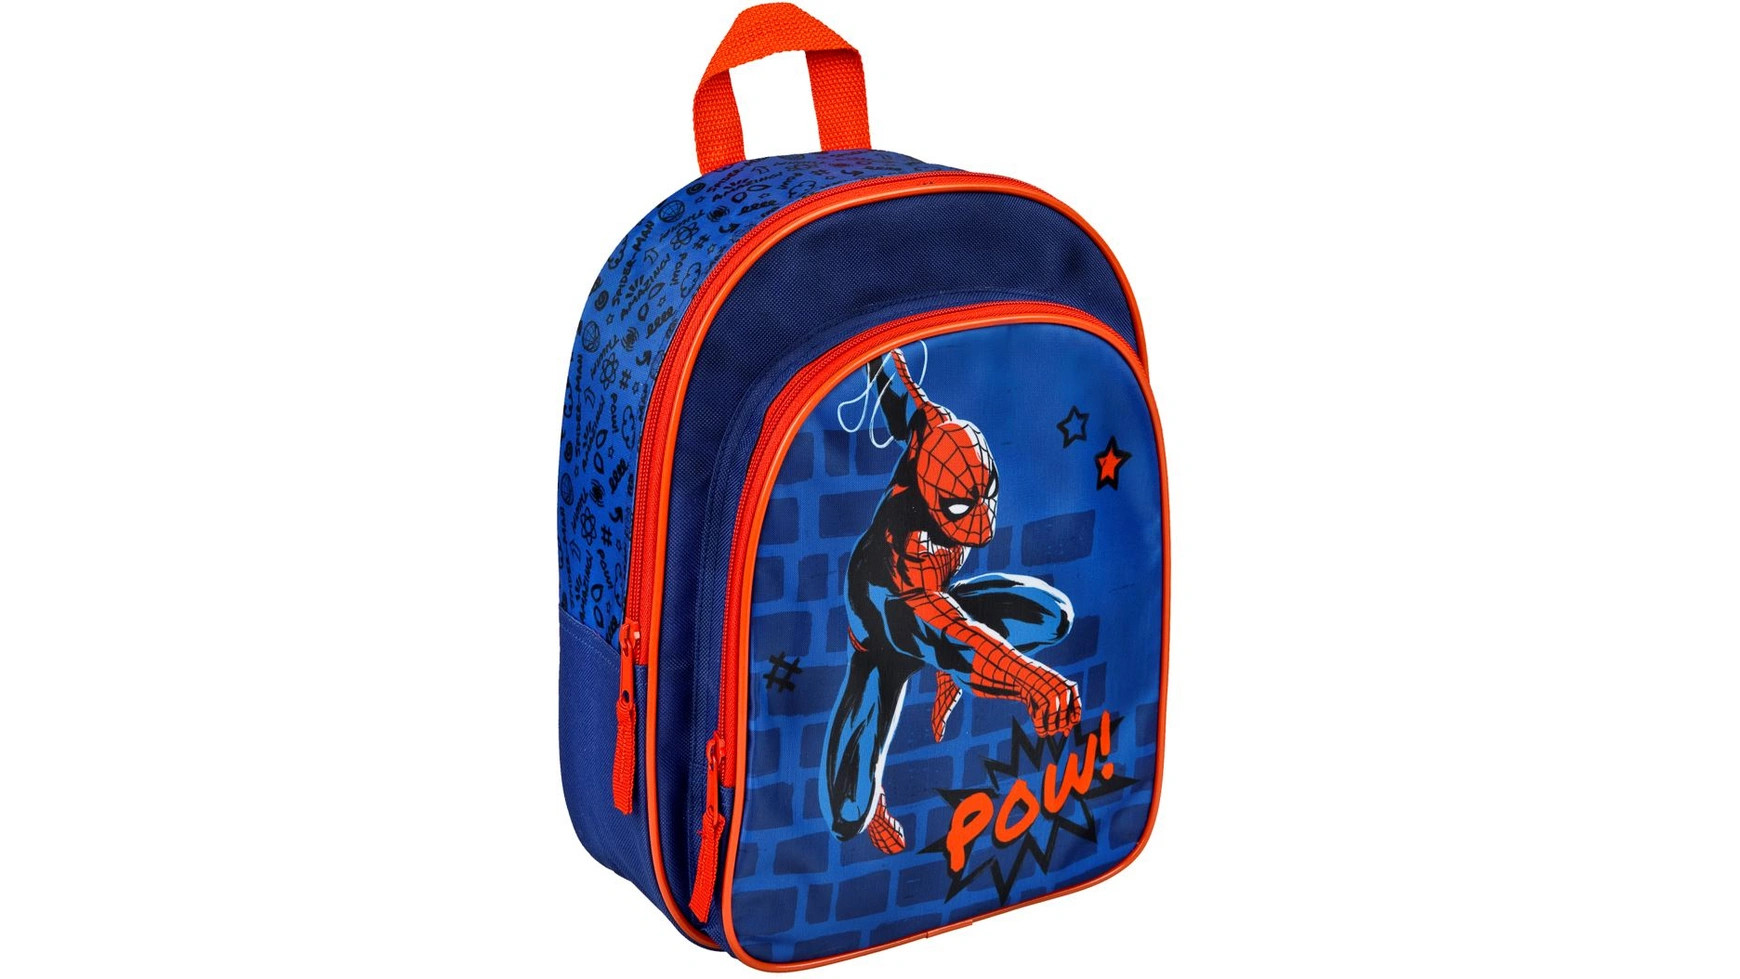 Undercover Рюкзак Marvel Spider-Man с передним карманом набор hollywood rides marvel spider man